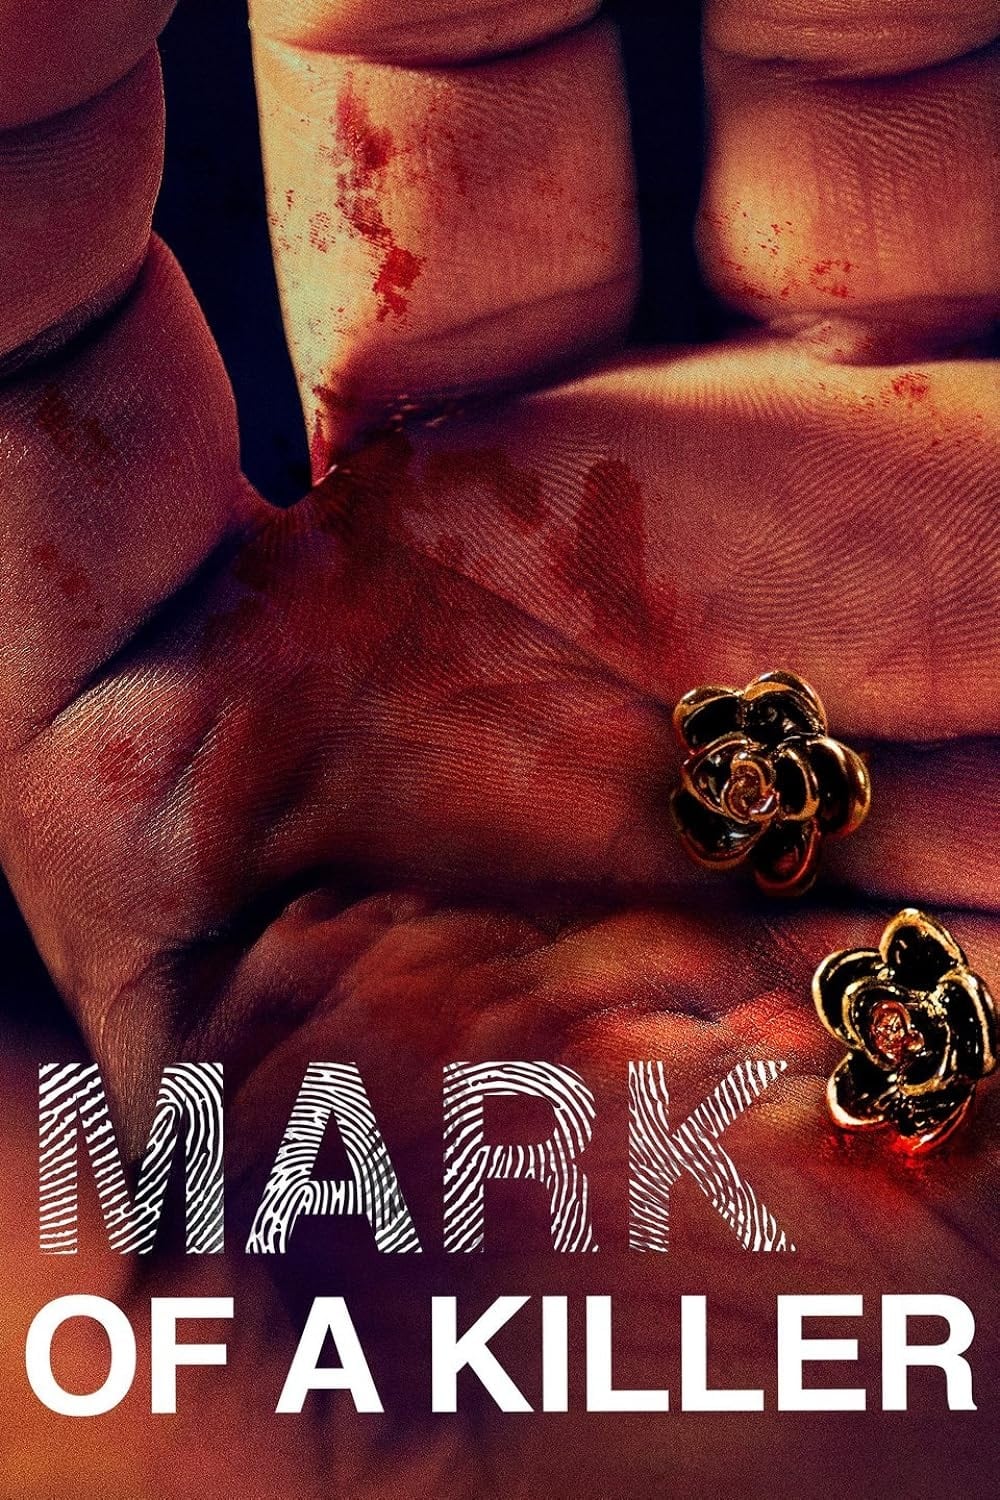 The mark of a killer